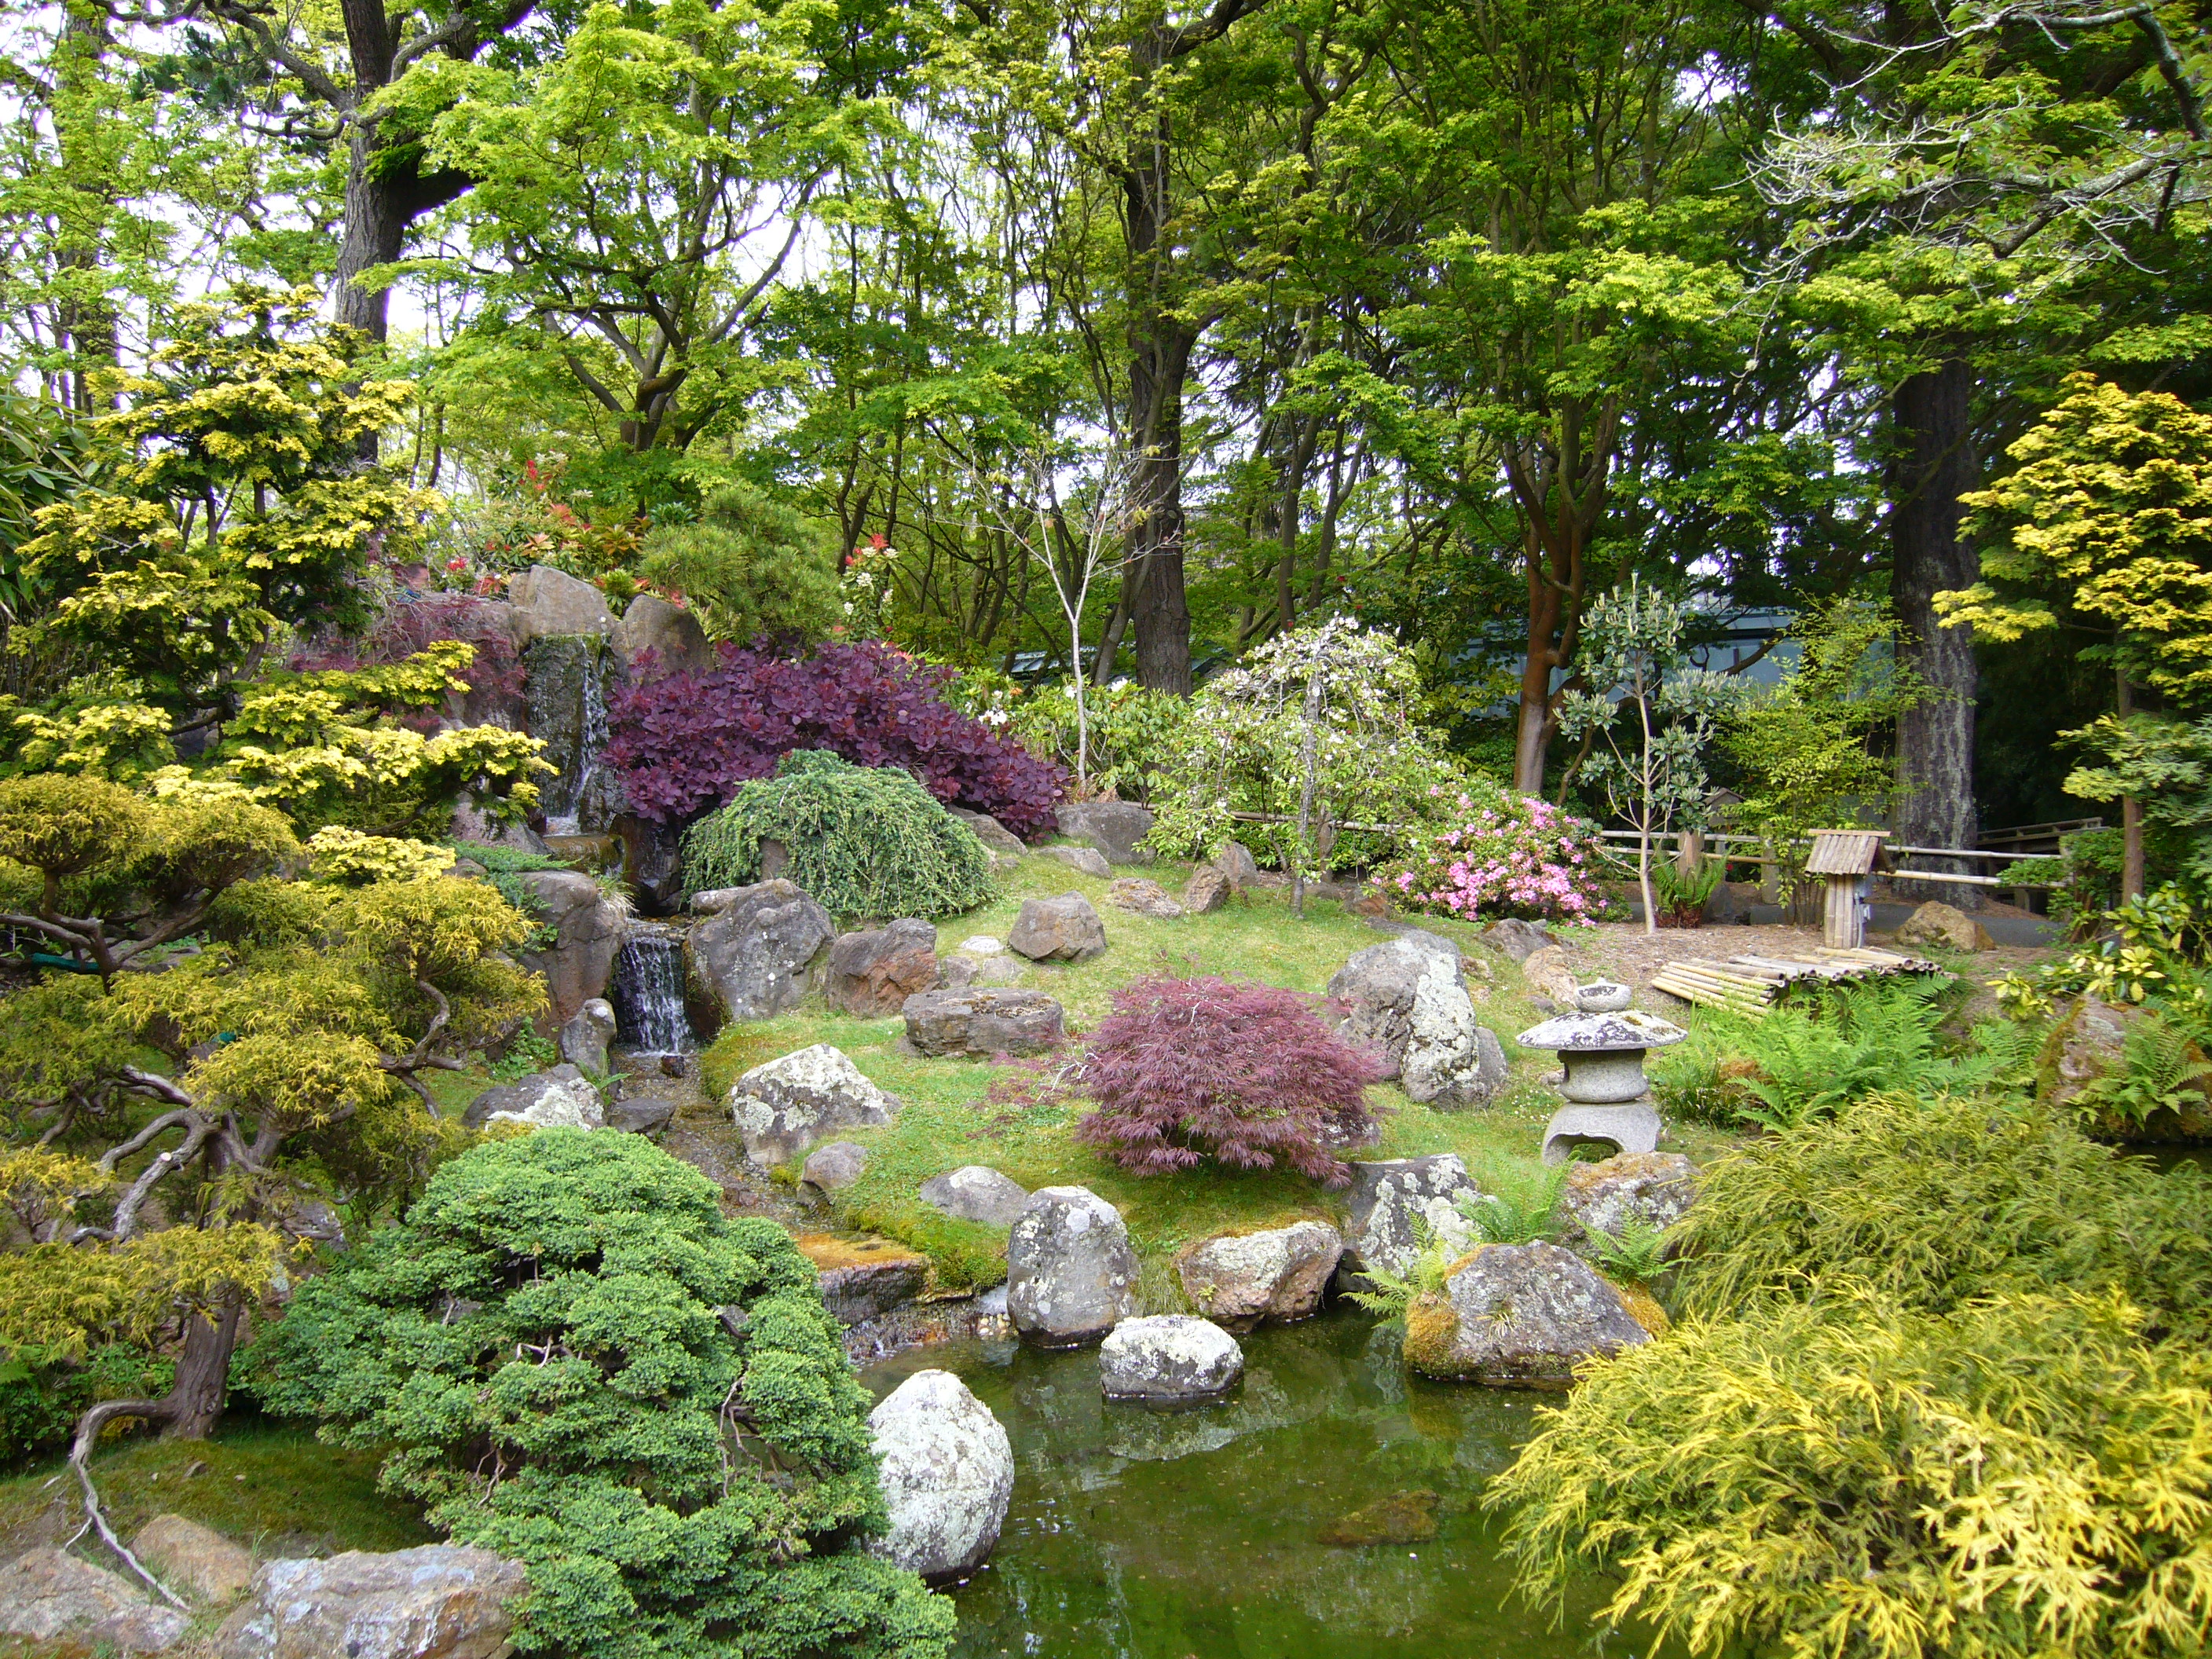 File:SF Japanese Garden.JPG - Wikipedia, the free encyclopedia